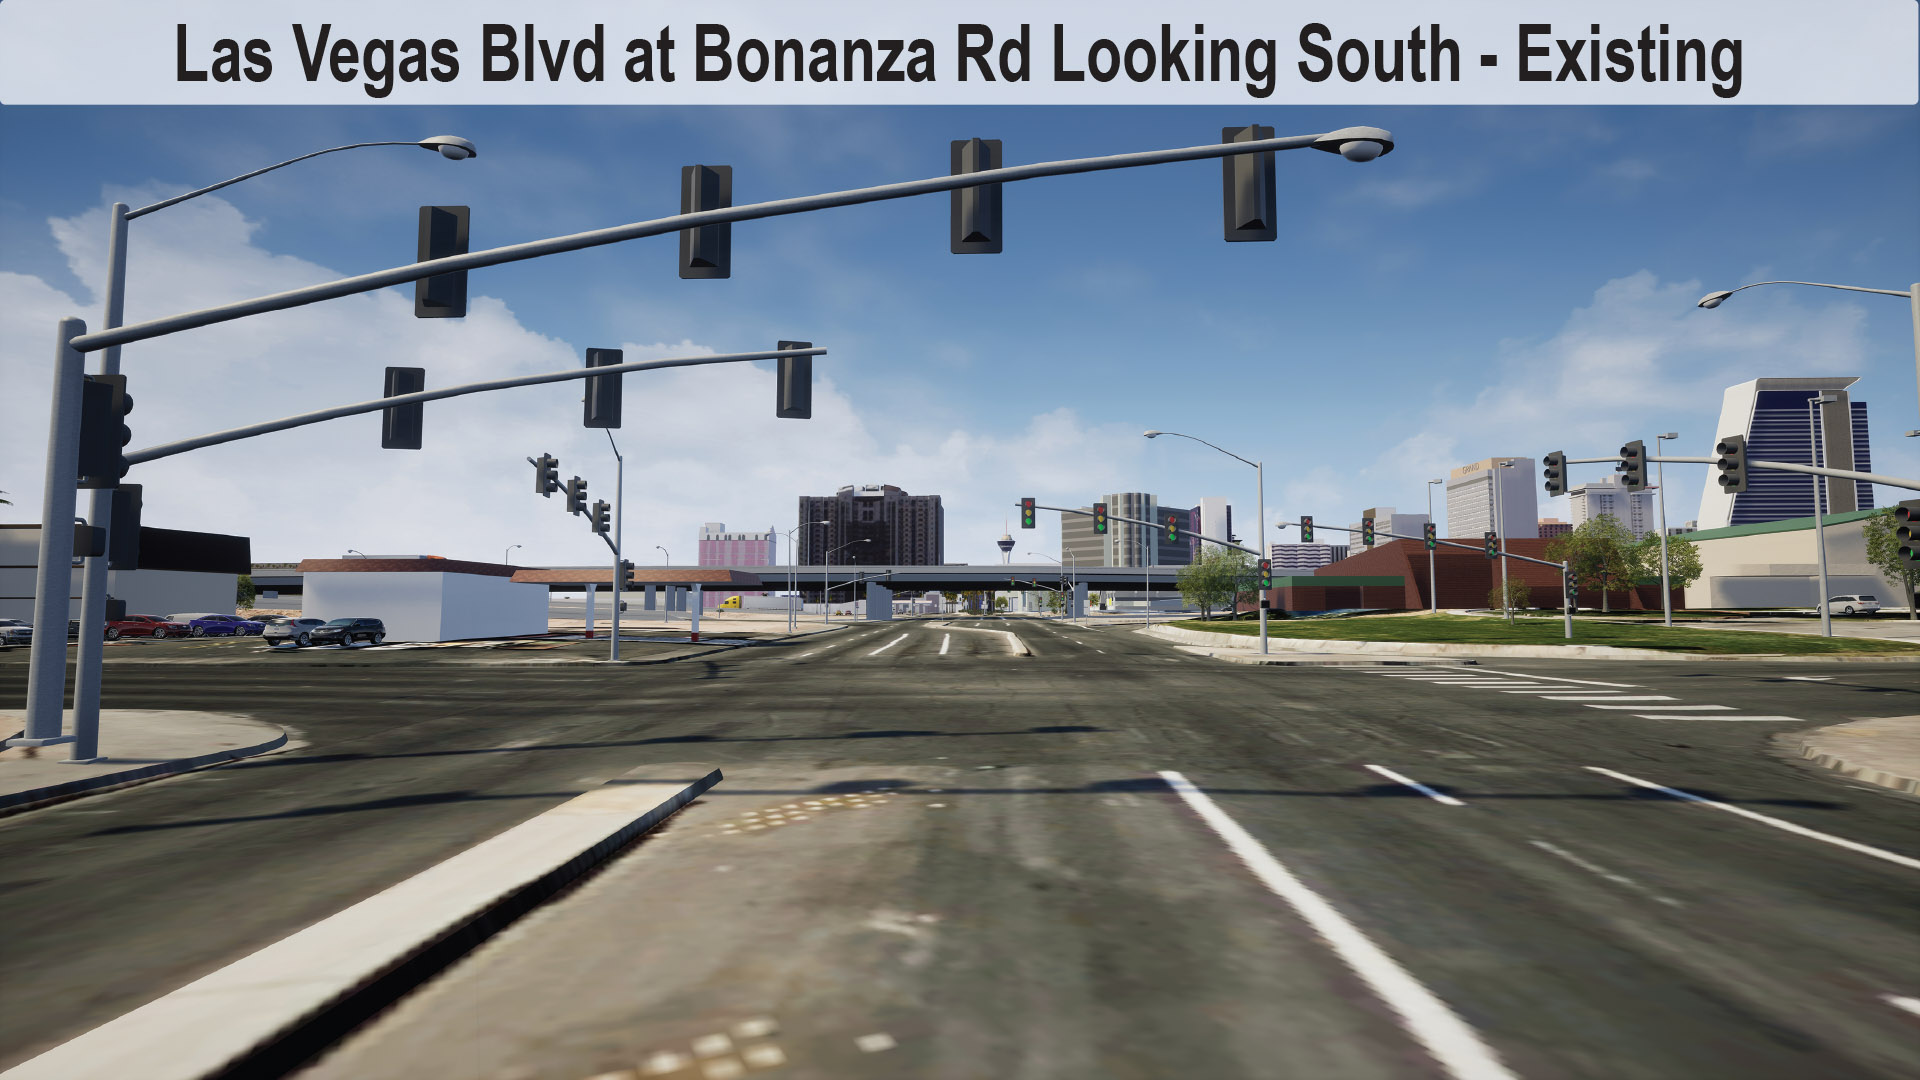 Las Vegas Blvd at Bonanza Rd Looking South - Existing